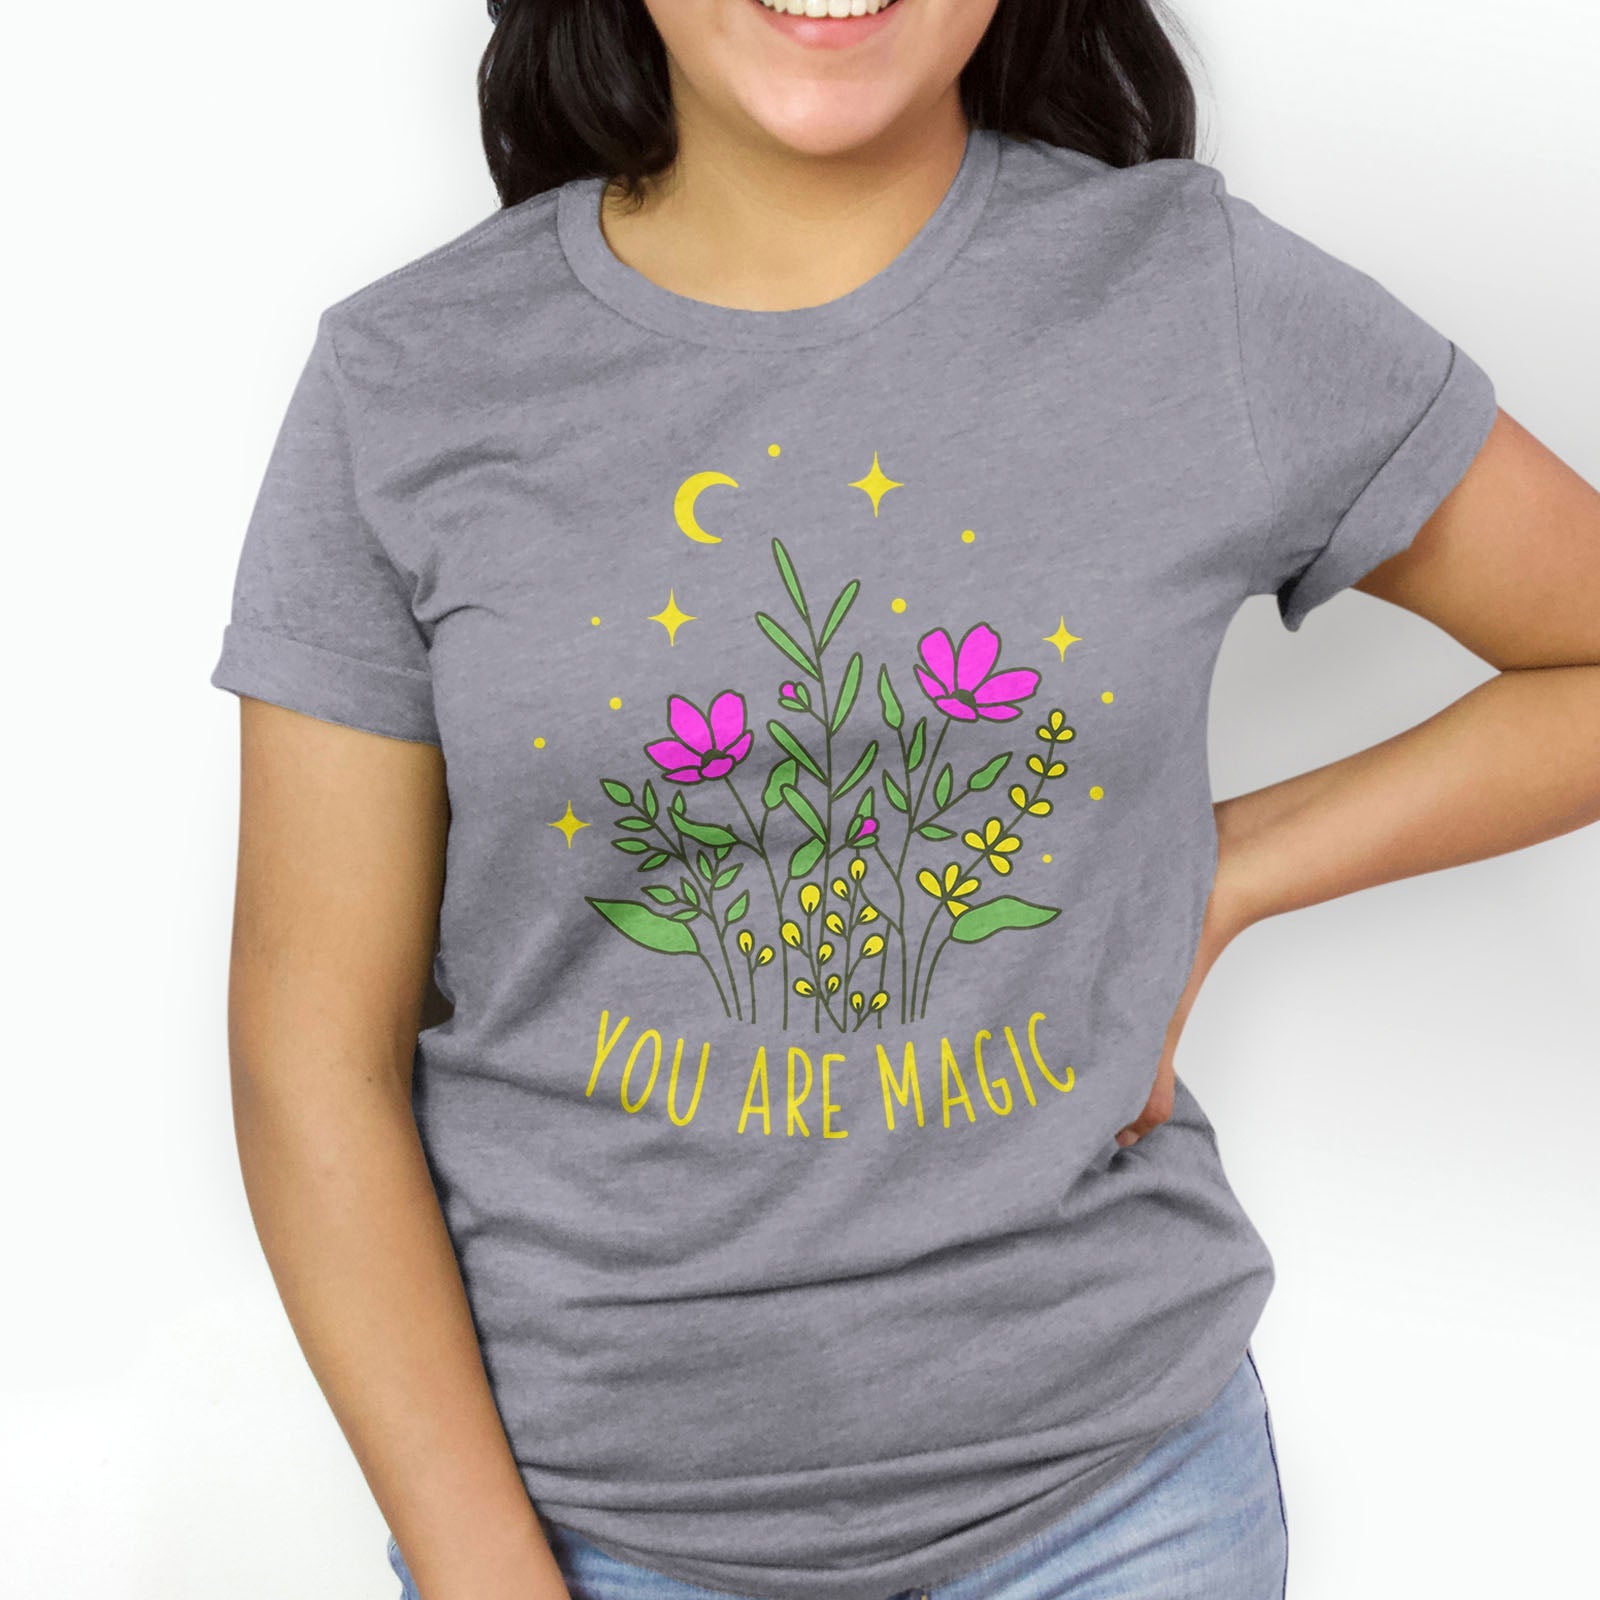 You Are Magic Tee Shirts For Women - Christian Shirts for Women - Religious Tee Shirts